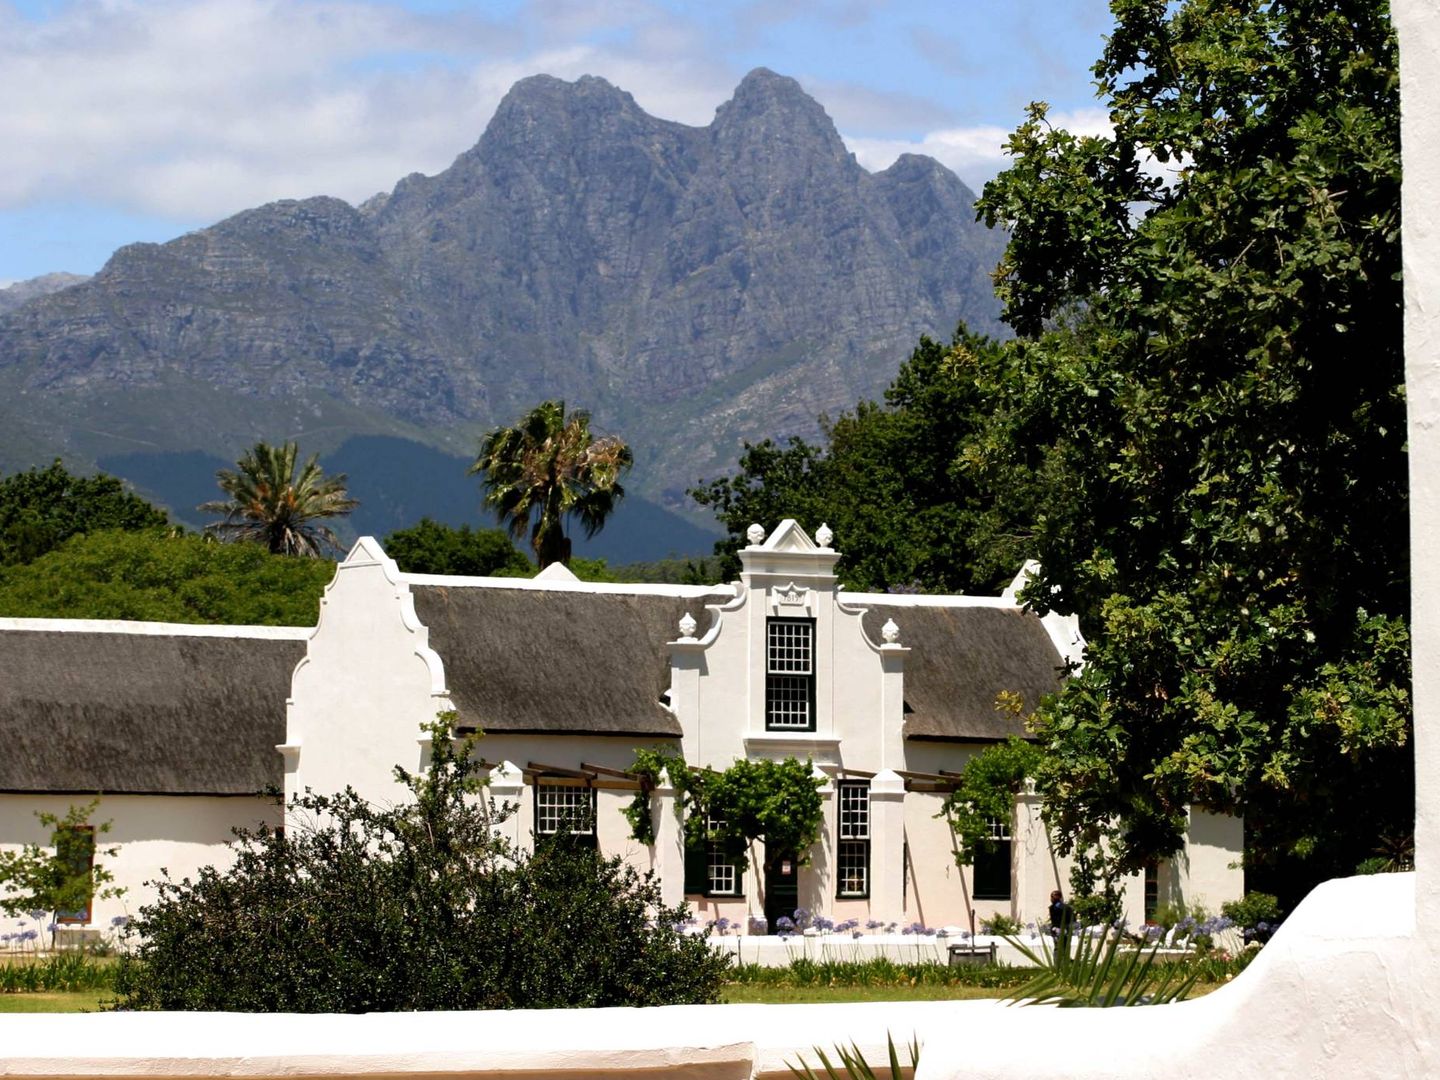 El museo de Stellenbosch, la capital sudafricana del vino. (Foto: Turismo Sudáfrica)